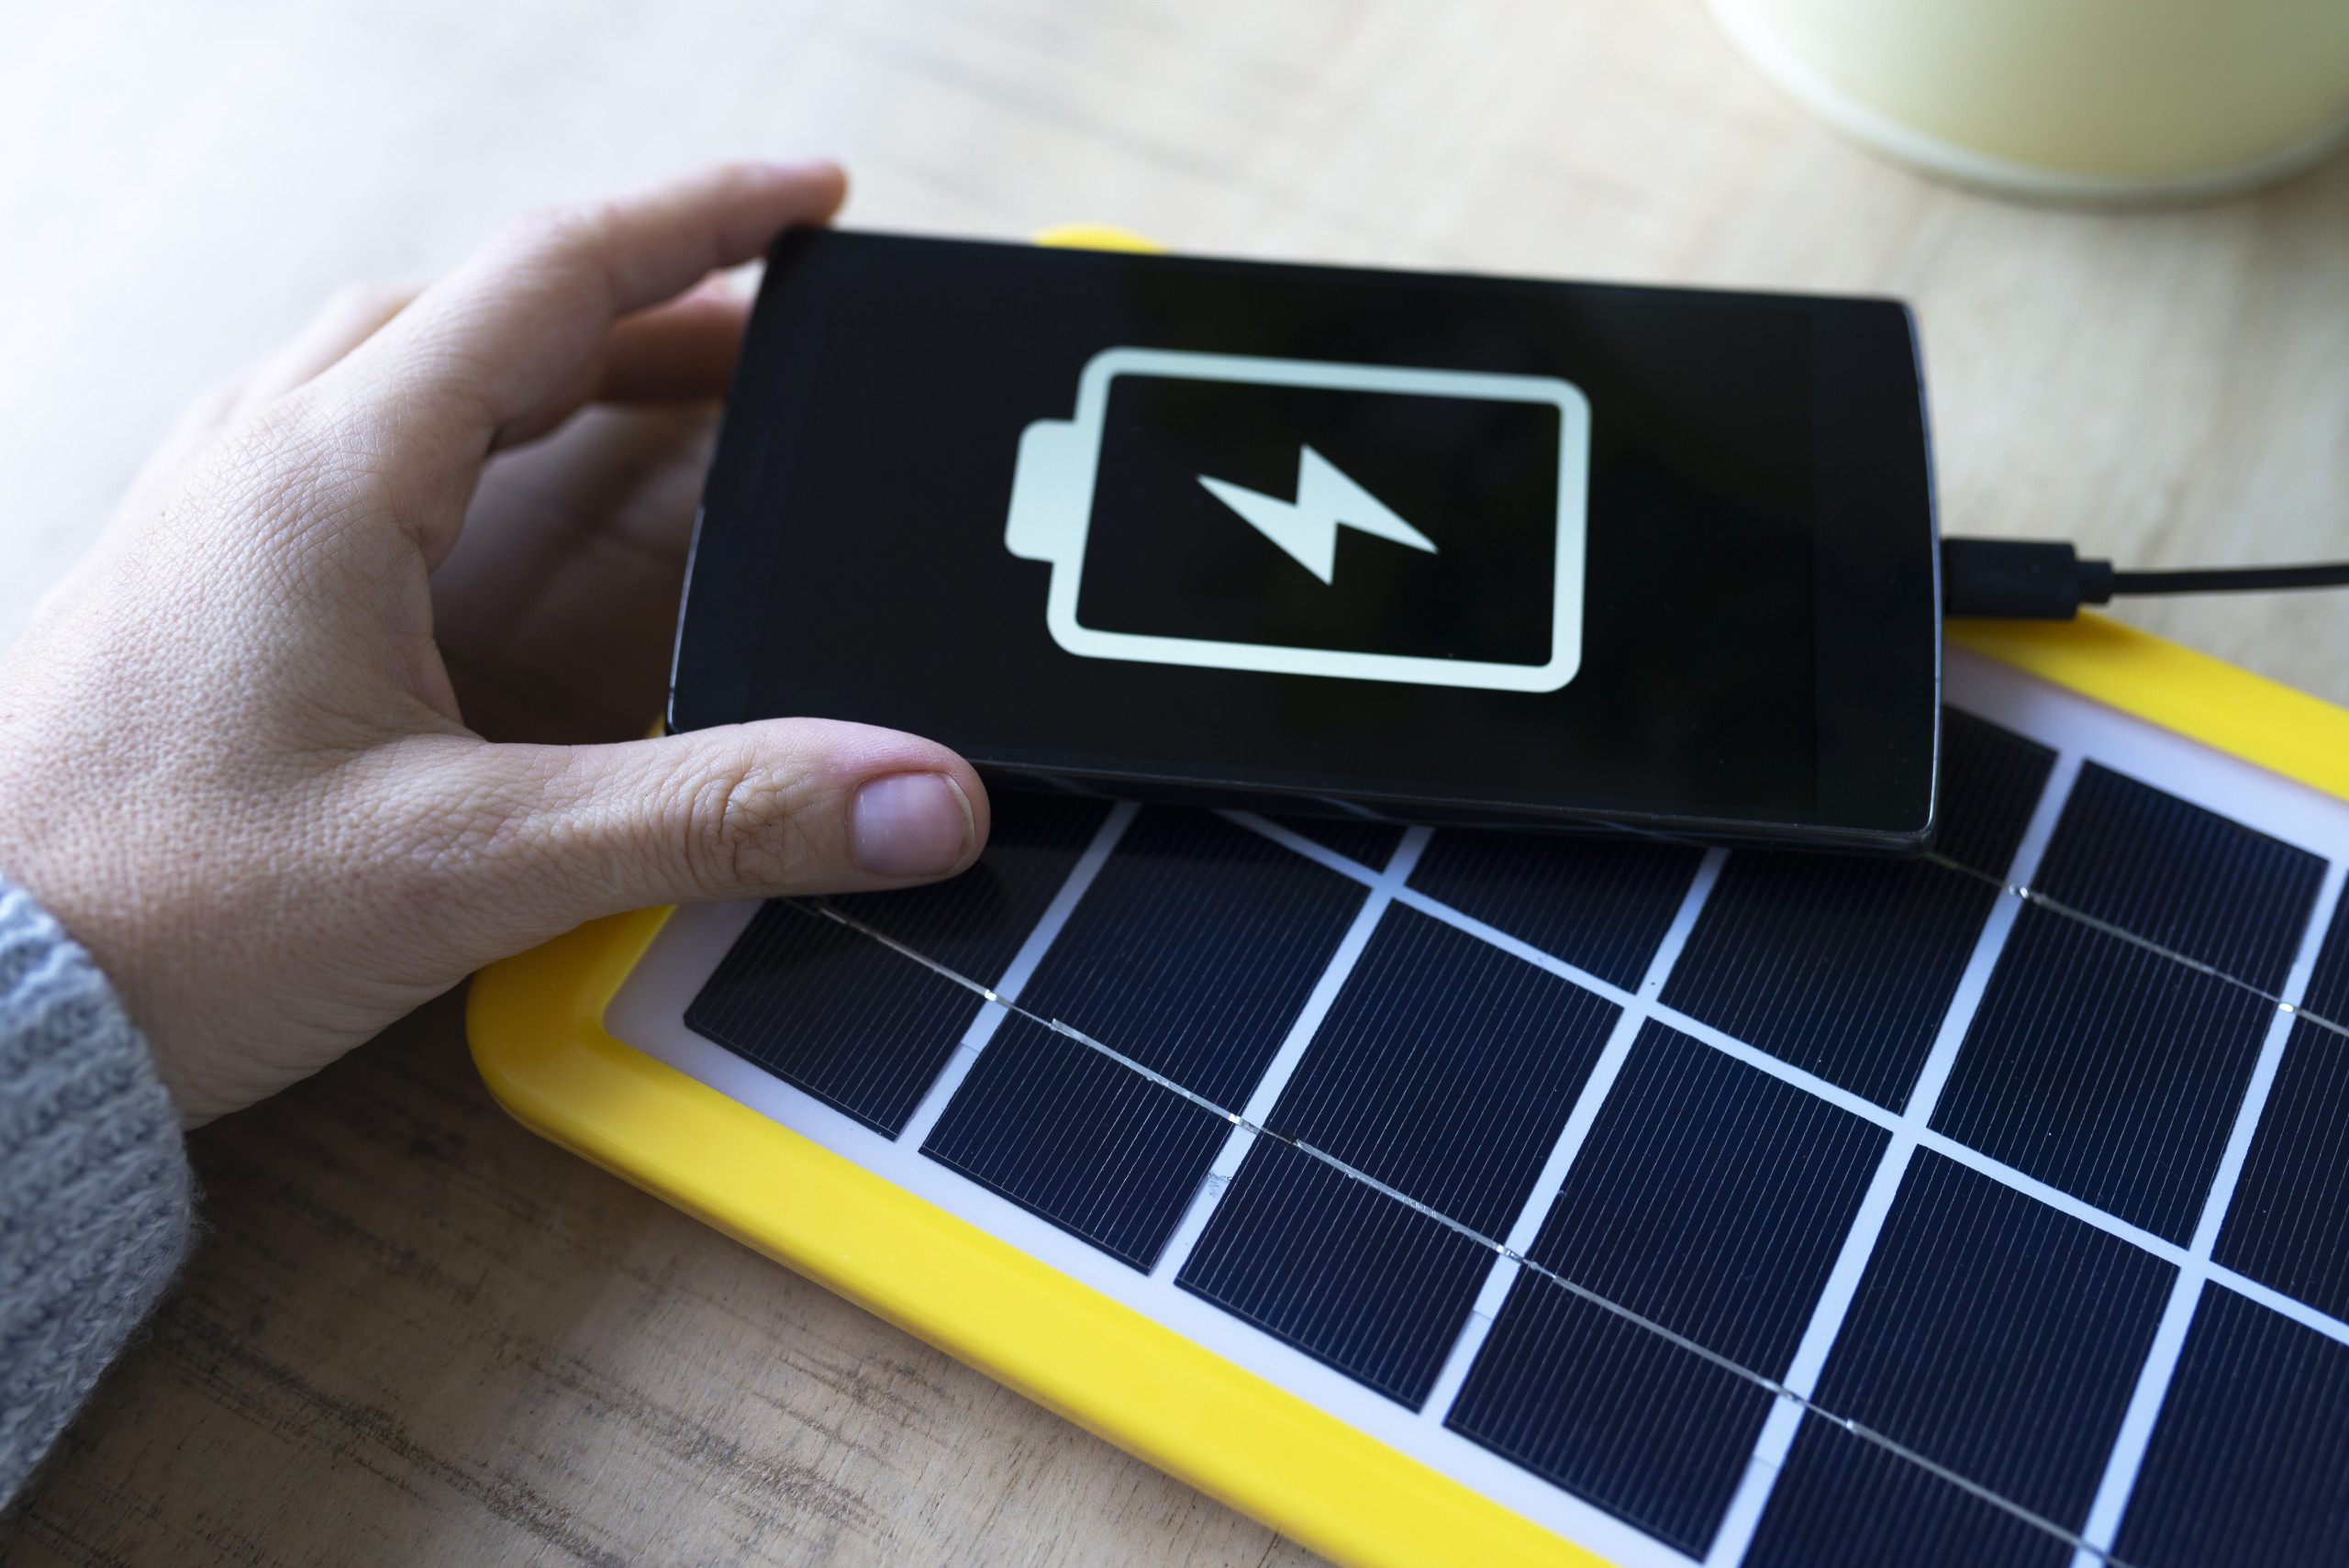 Renewable energy technology, solar panel charging a mobile phone battery